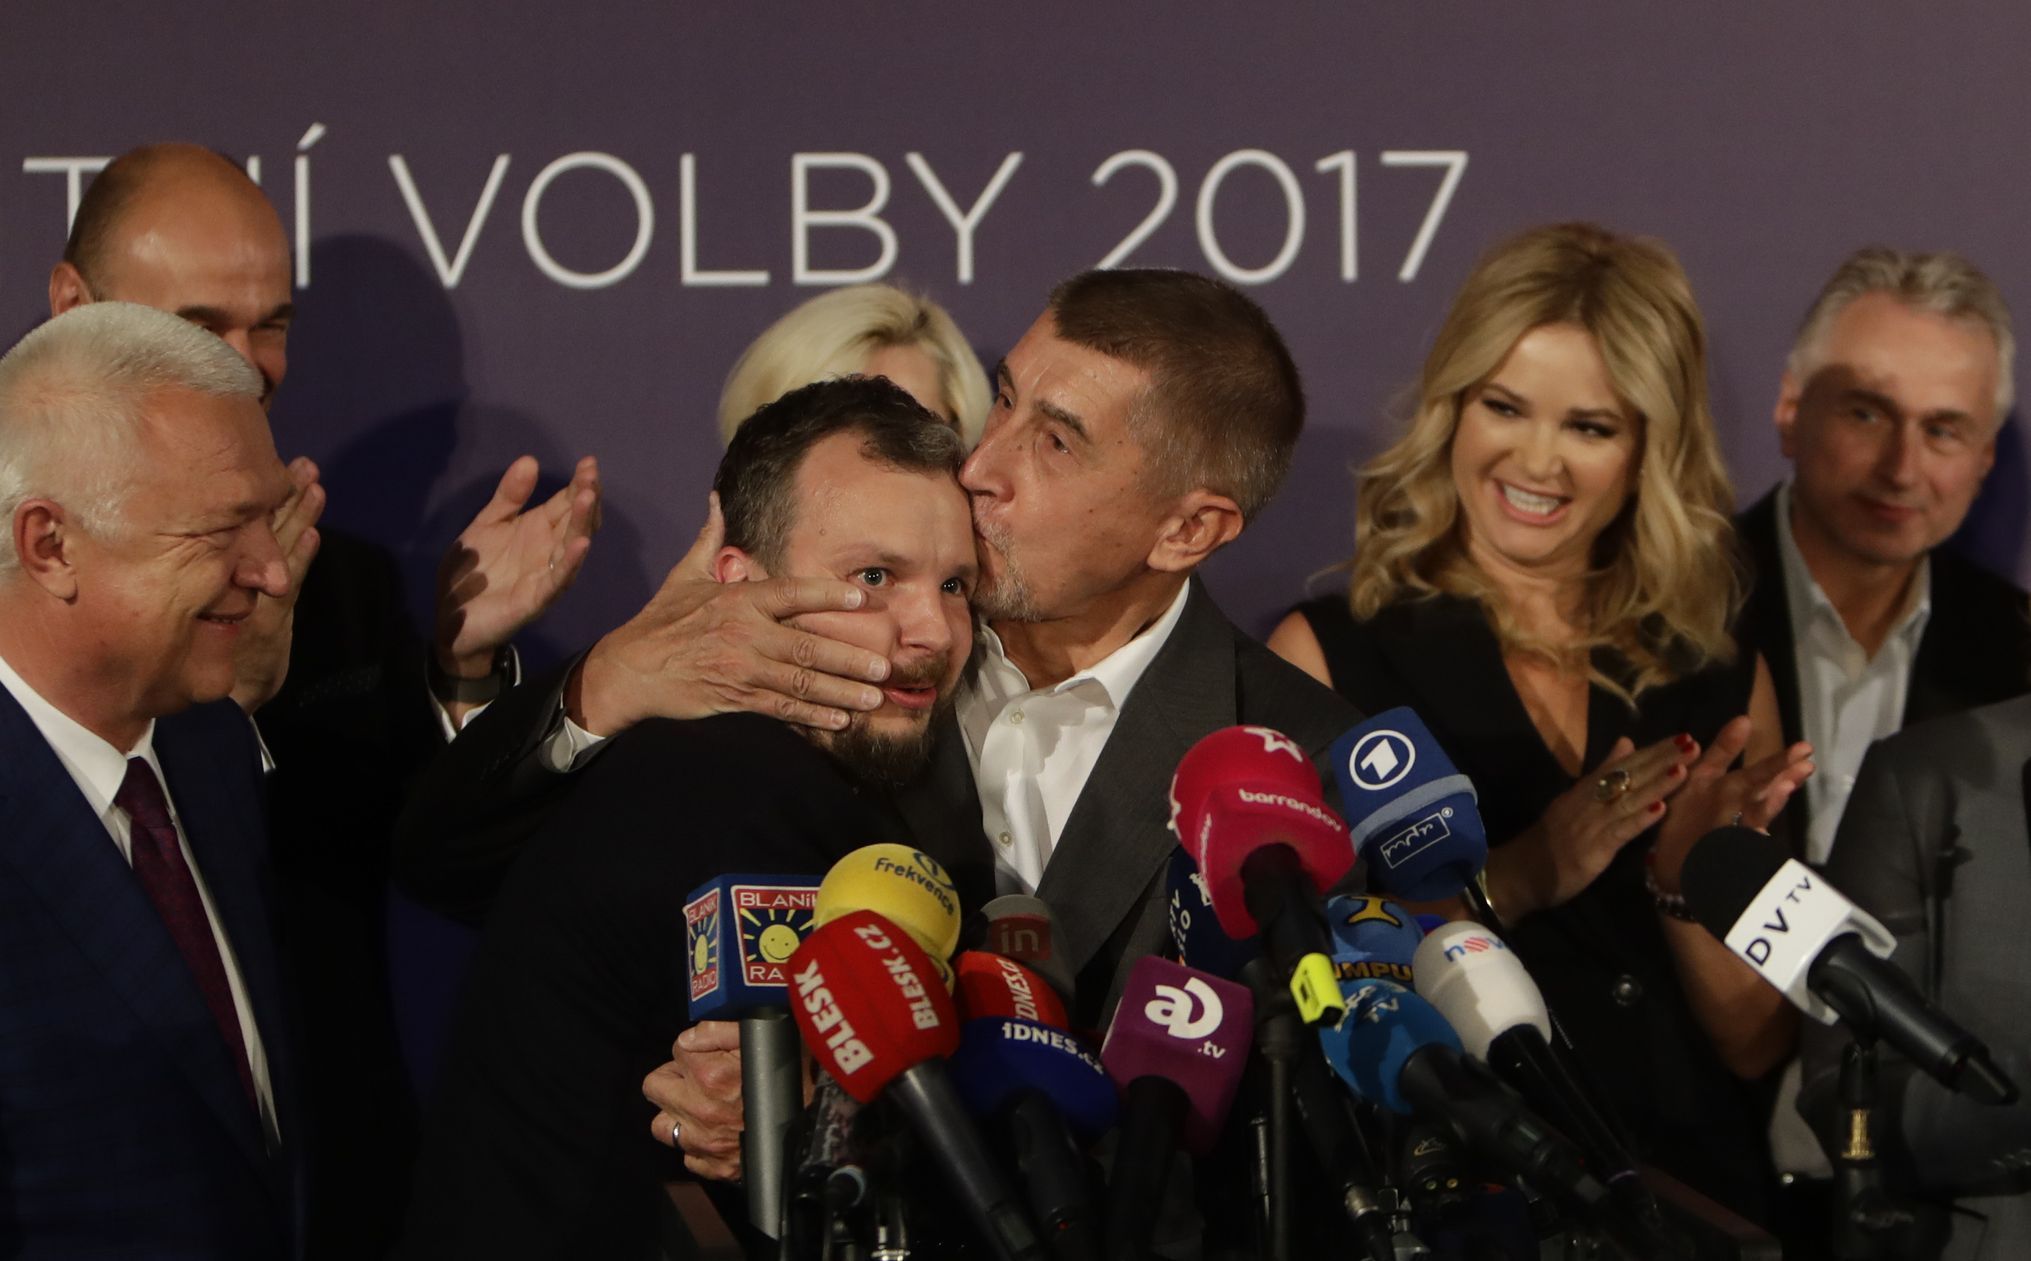 Volby 2017 - ANO - Andrej Babiš - Marek Prchal